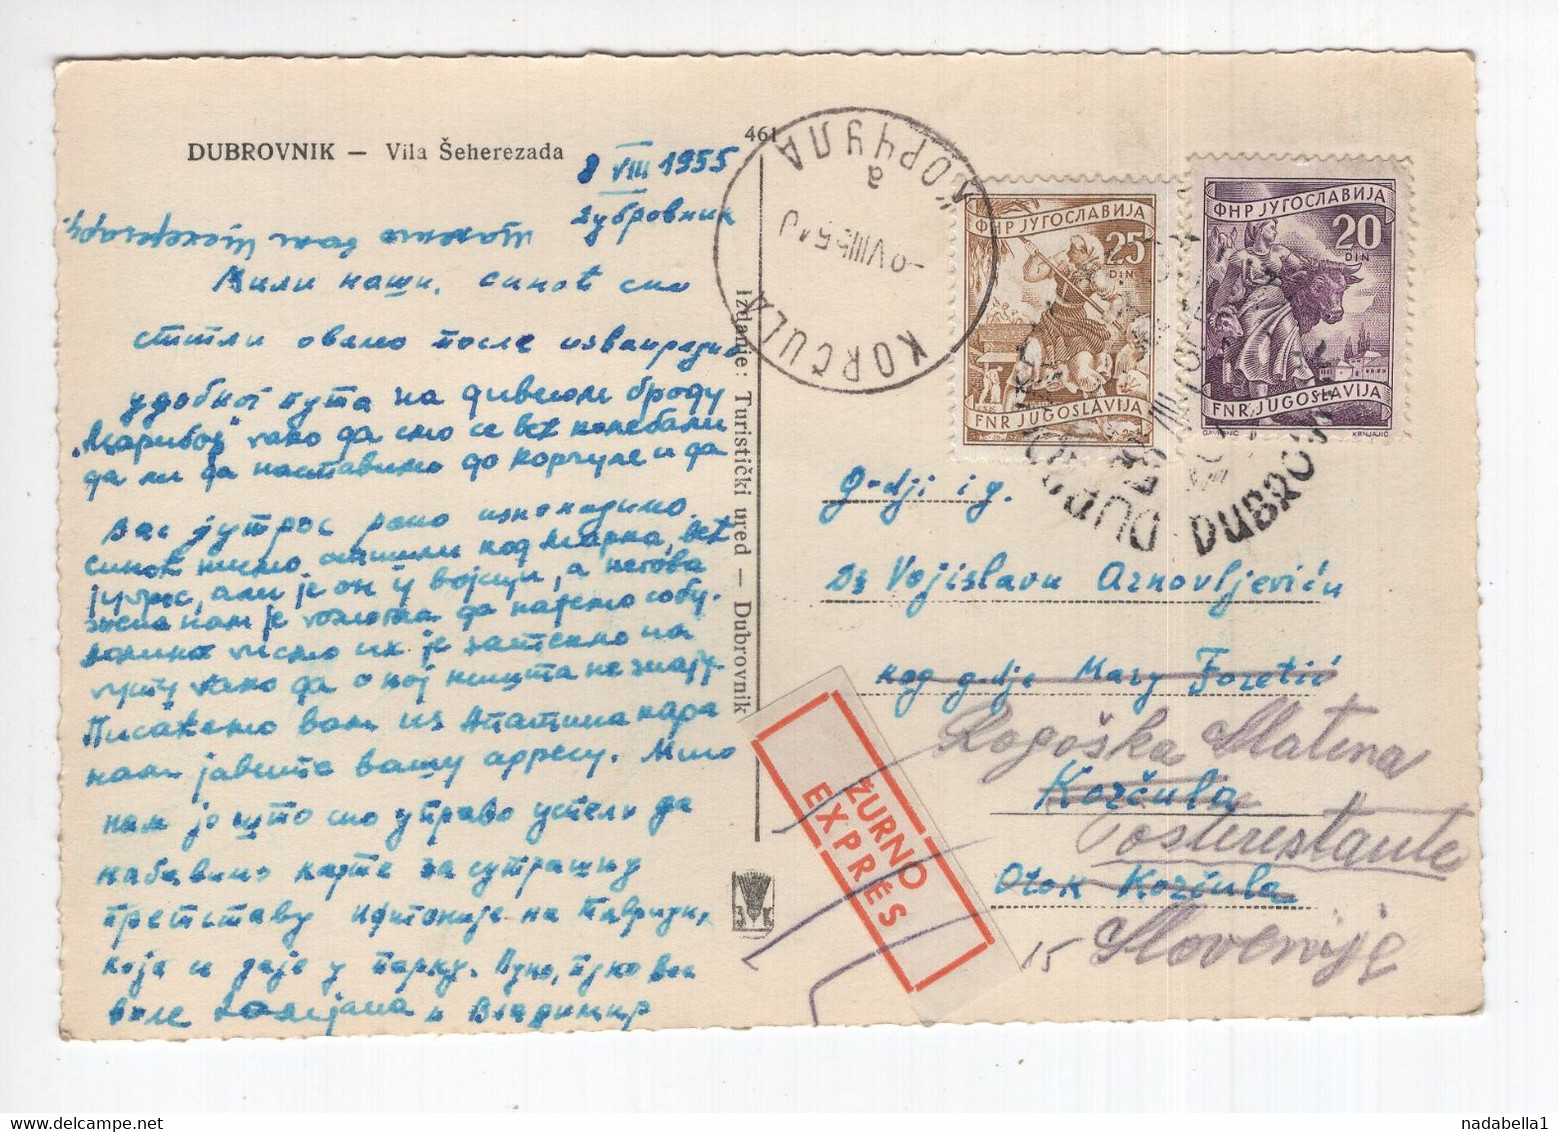 1955. YUGOSLAVIA,CROATIA,DUBROVNIK TO KORCULA,RESENTED RO ROGAŠKA SLATINA 10 + 5 DIN POSTAGE DUE APPLIED,POSTCARD - Postage Due